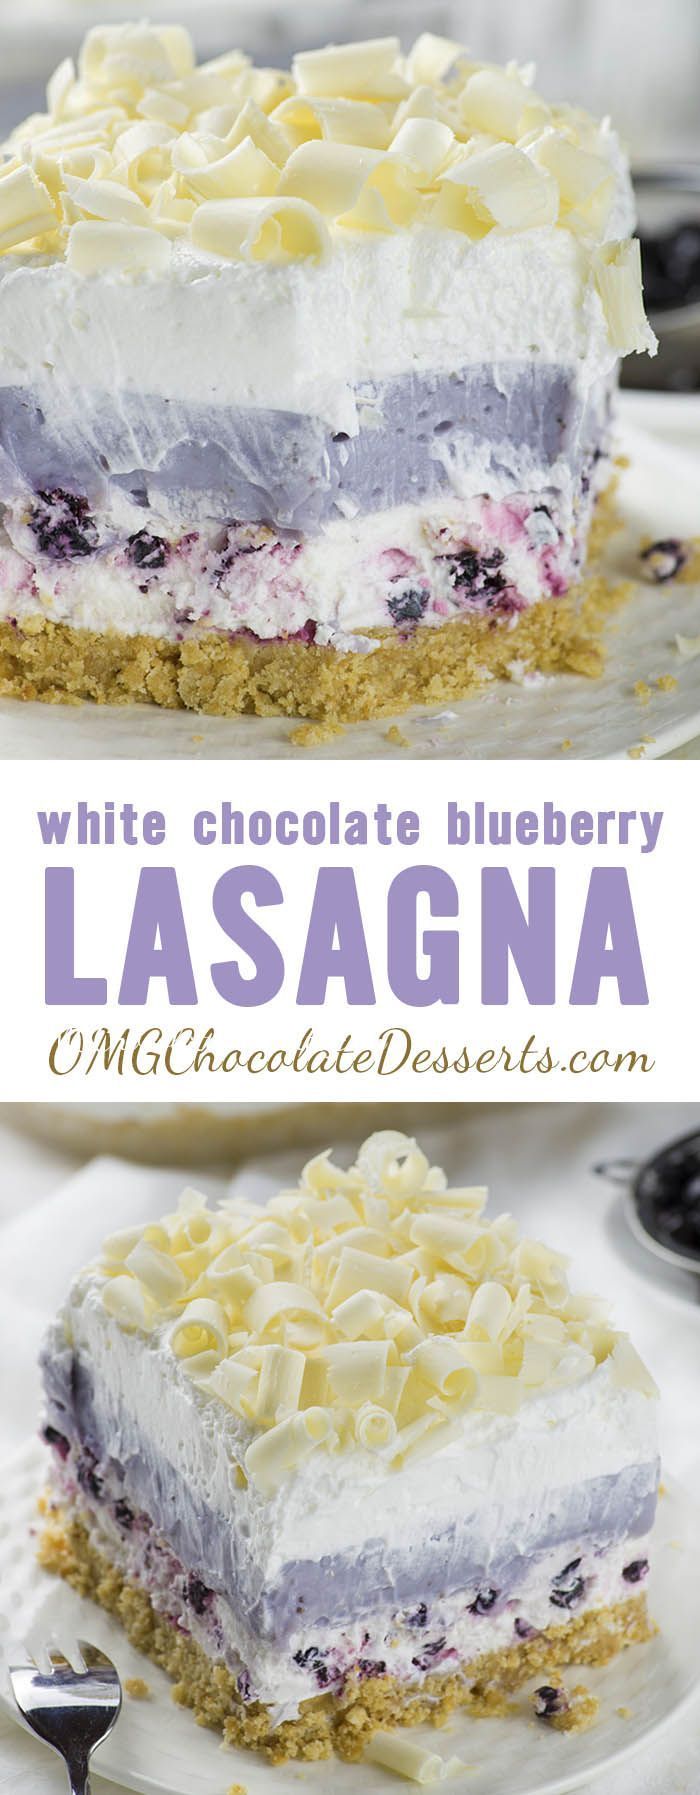 SIMPLE, REFRESHING, NO BAKE BLUEBERRY DESSERT RECIPE  – WHITE CHOCOLATE BLUEBERRY LASAGNA!